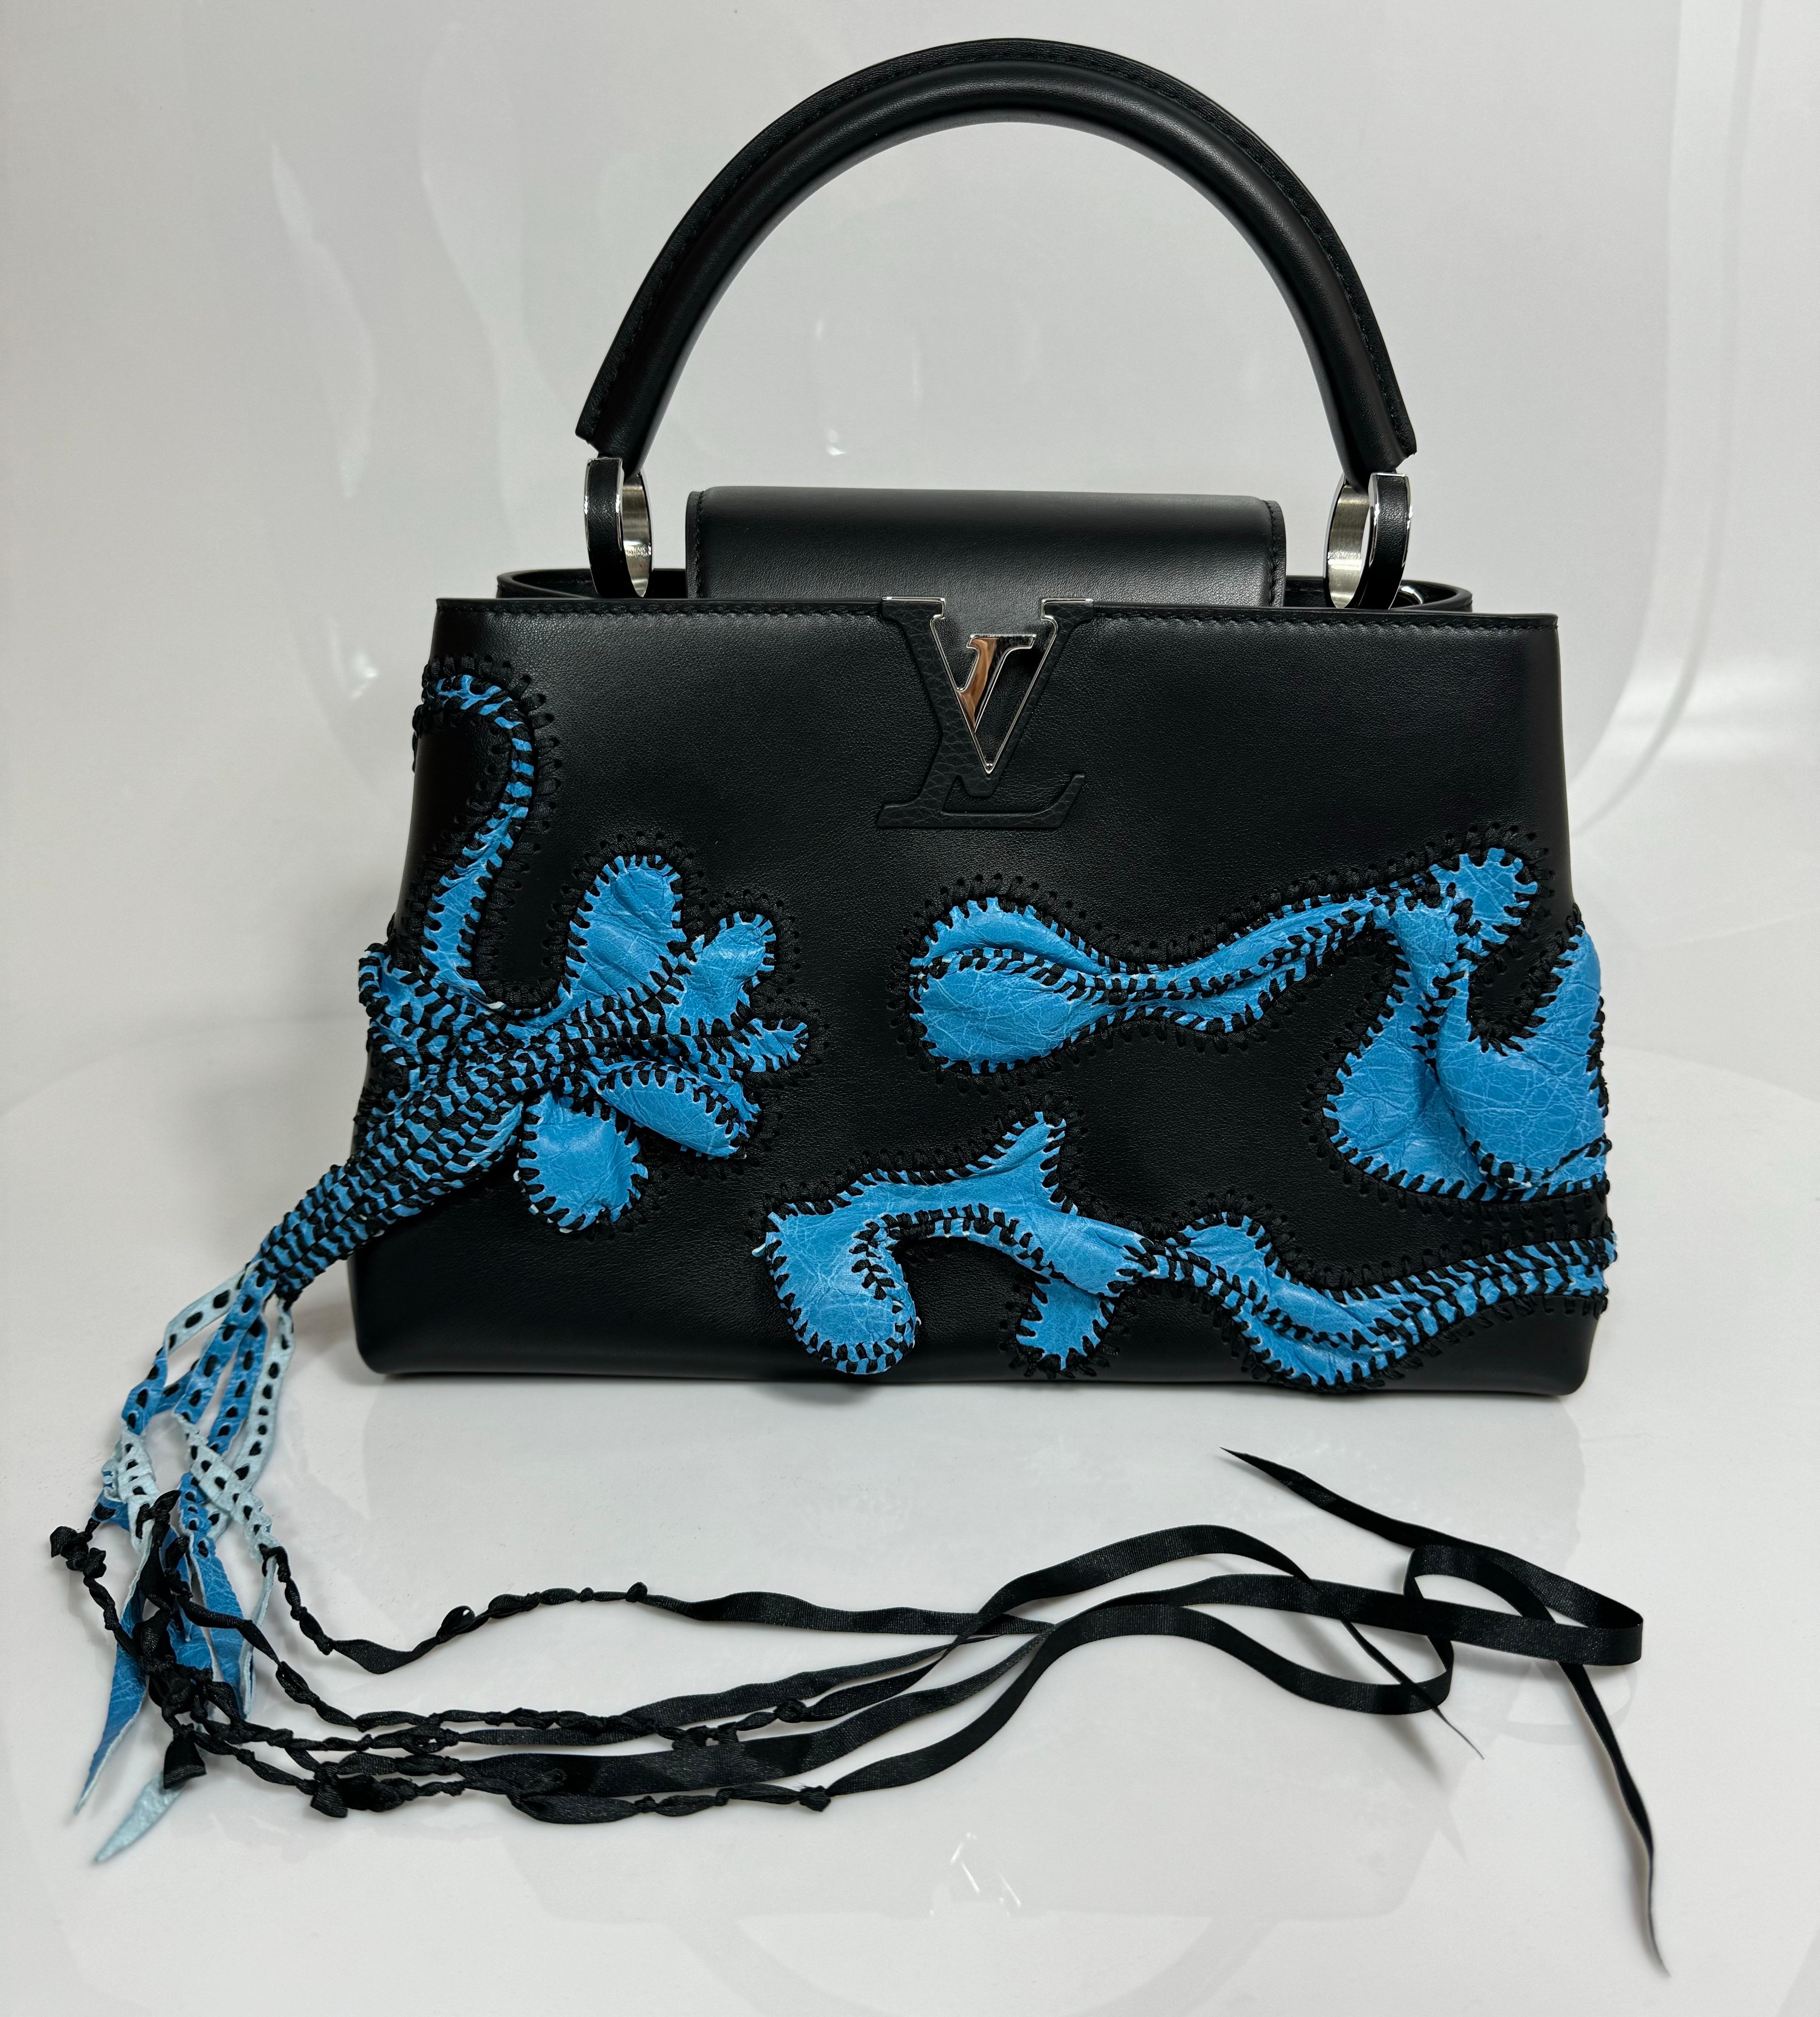 Women's or Men's Louis Vuitton Limited Edition Nicholas Hlobo's Artycapucines Handbag-NEW IN BOX For Sale